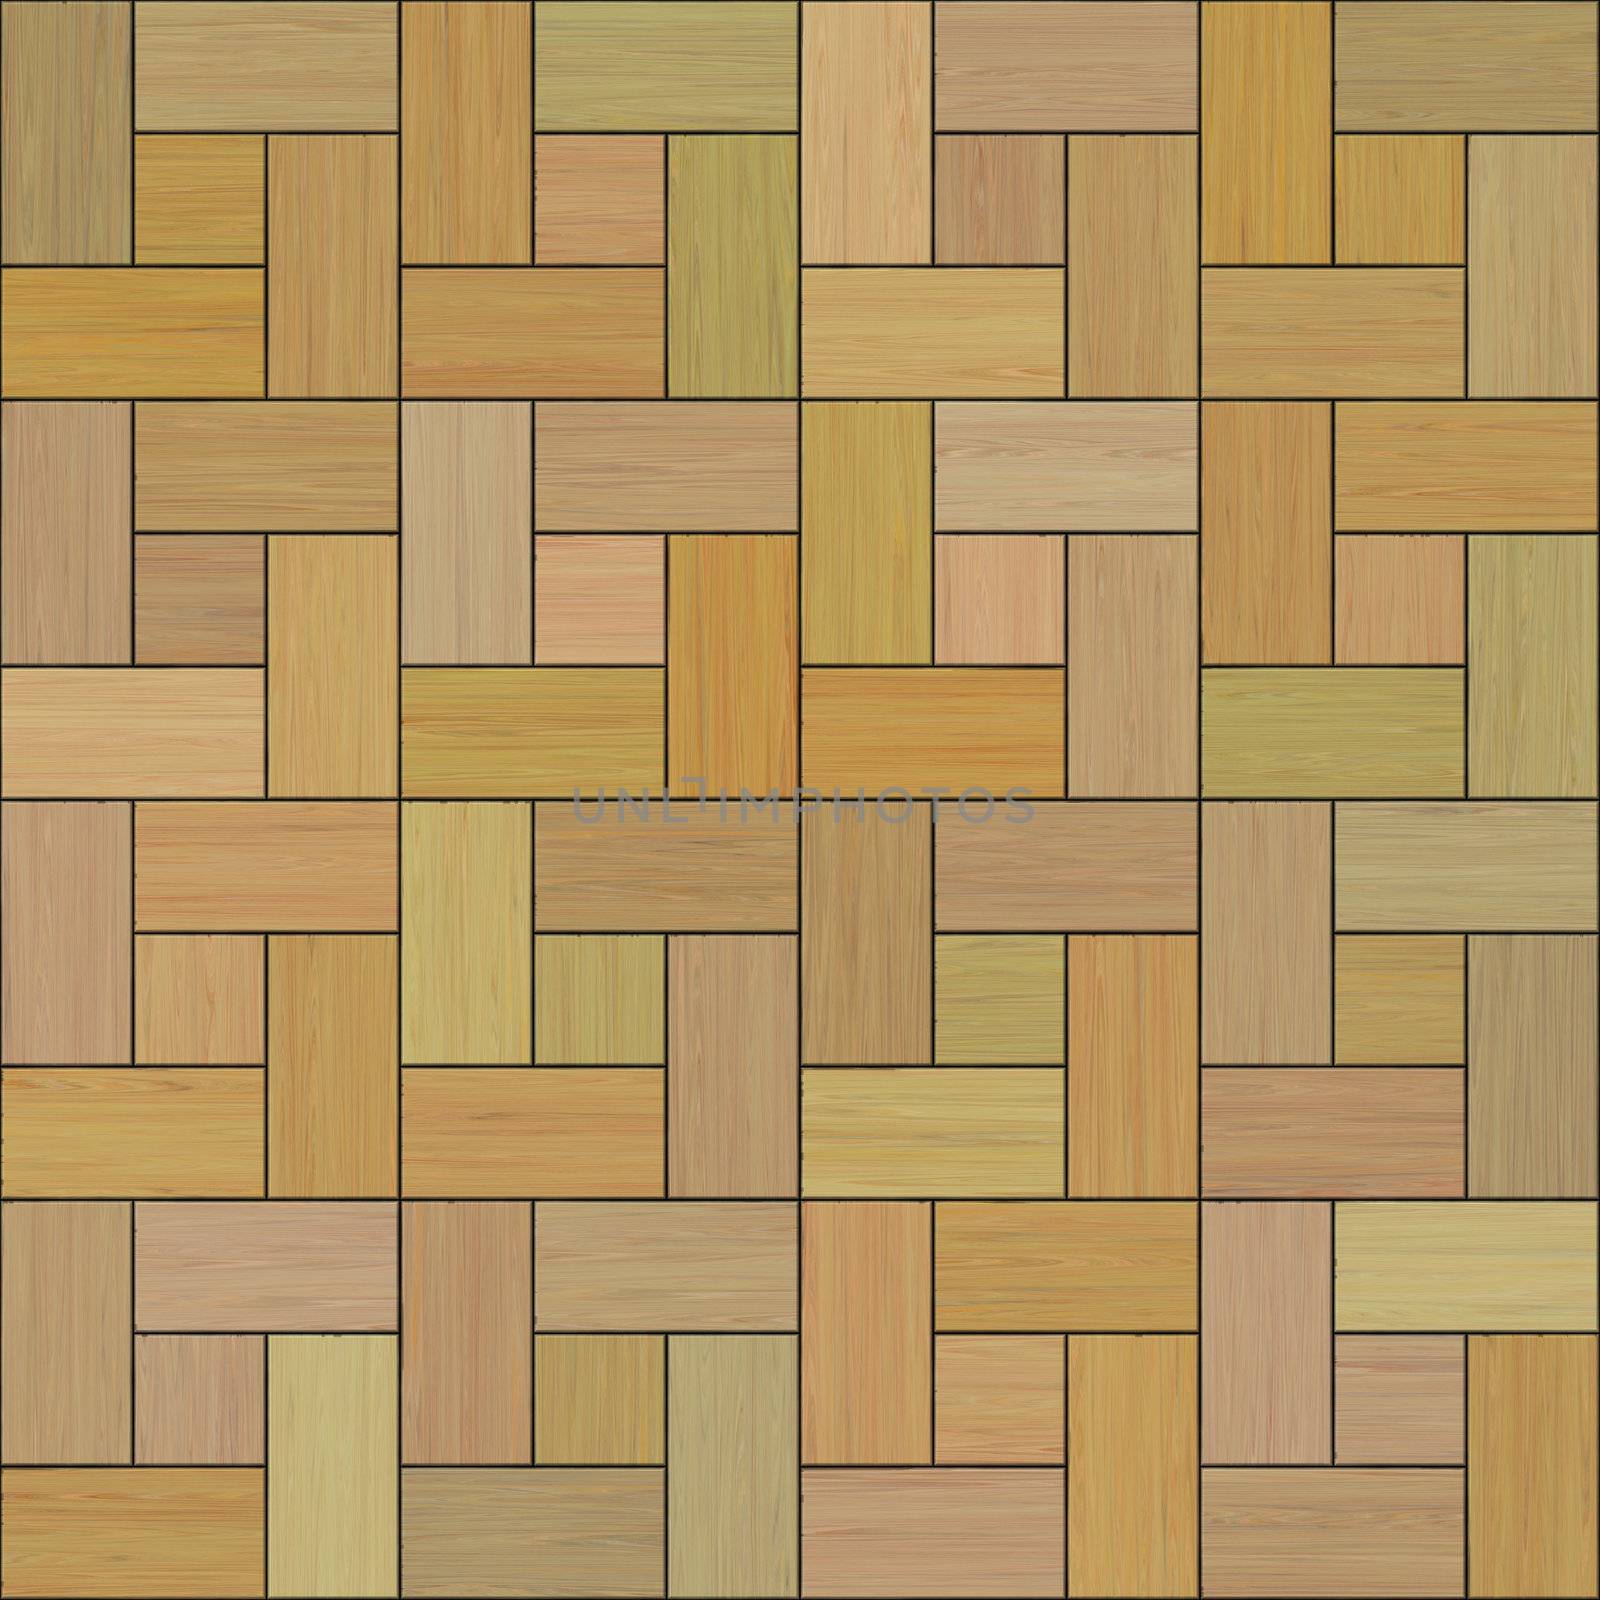 Seamless high quality high resolution wooden floor tiles